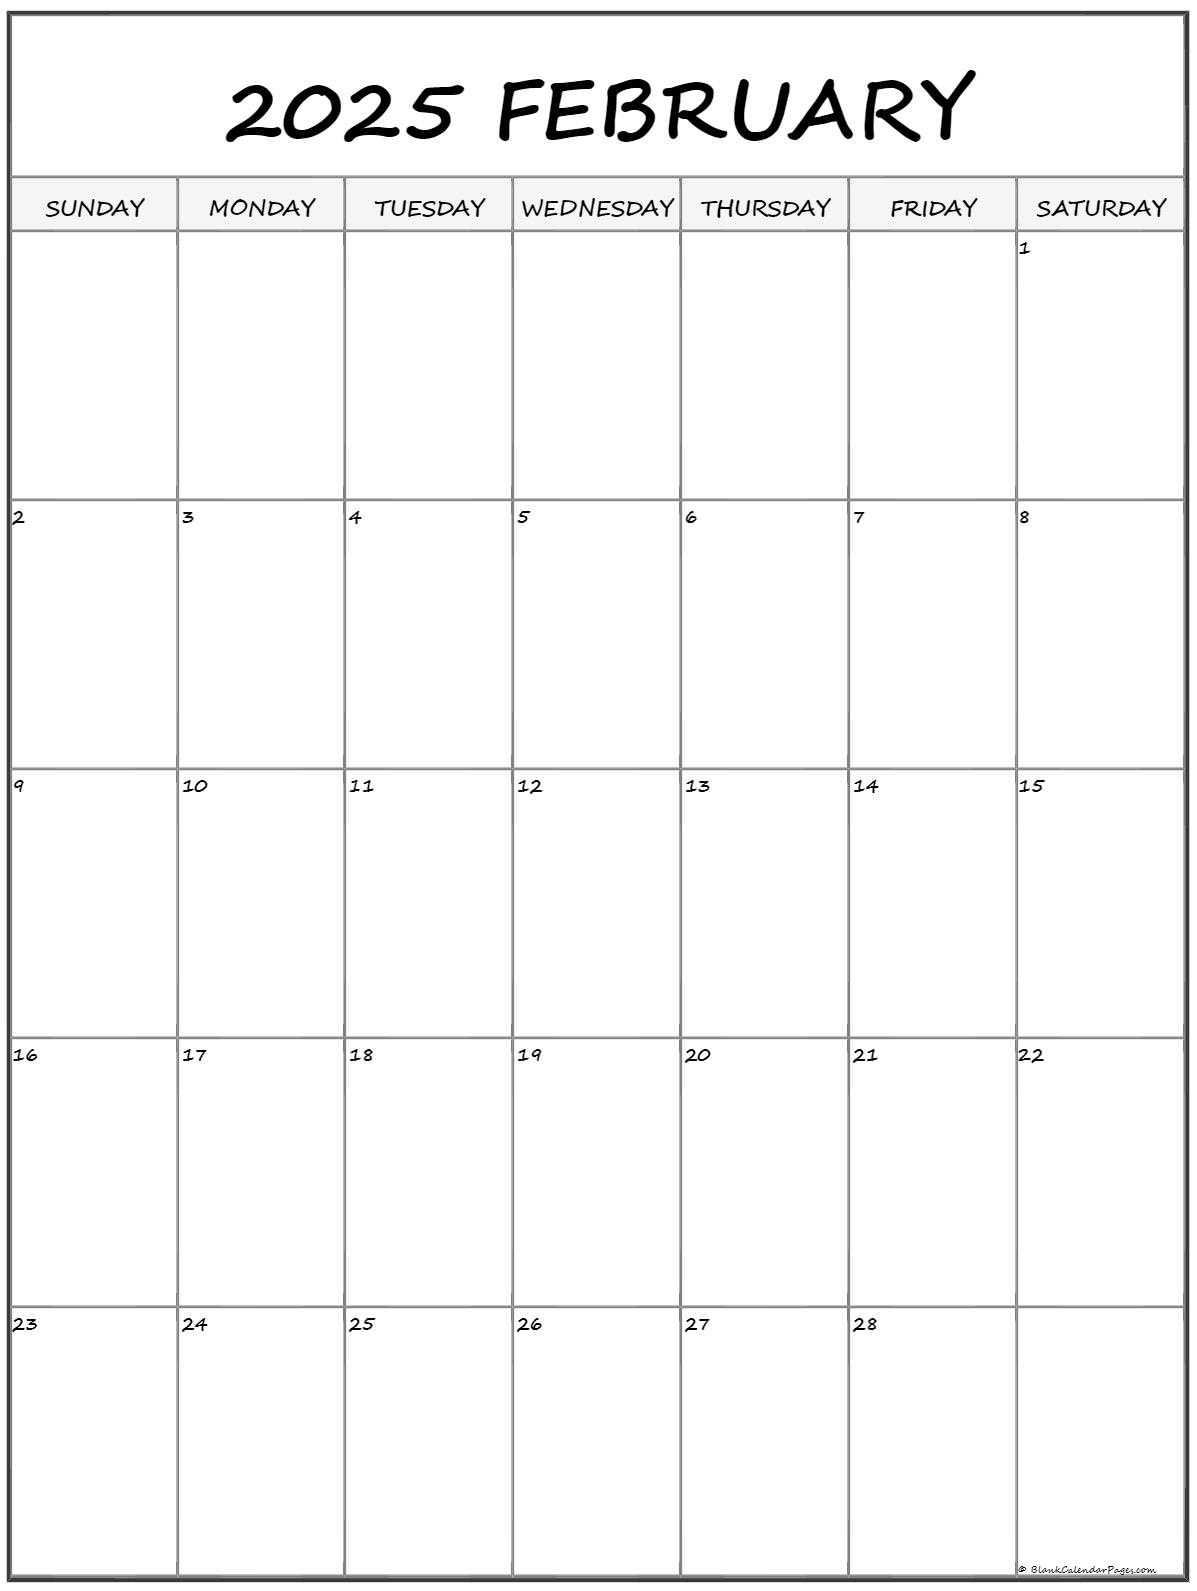 February 2025 Free Calendar